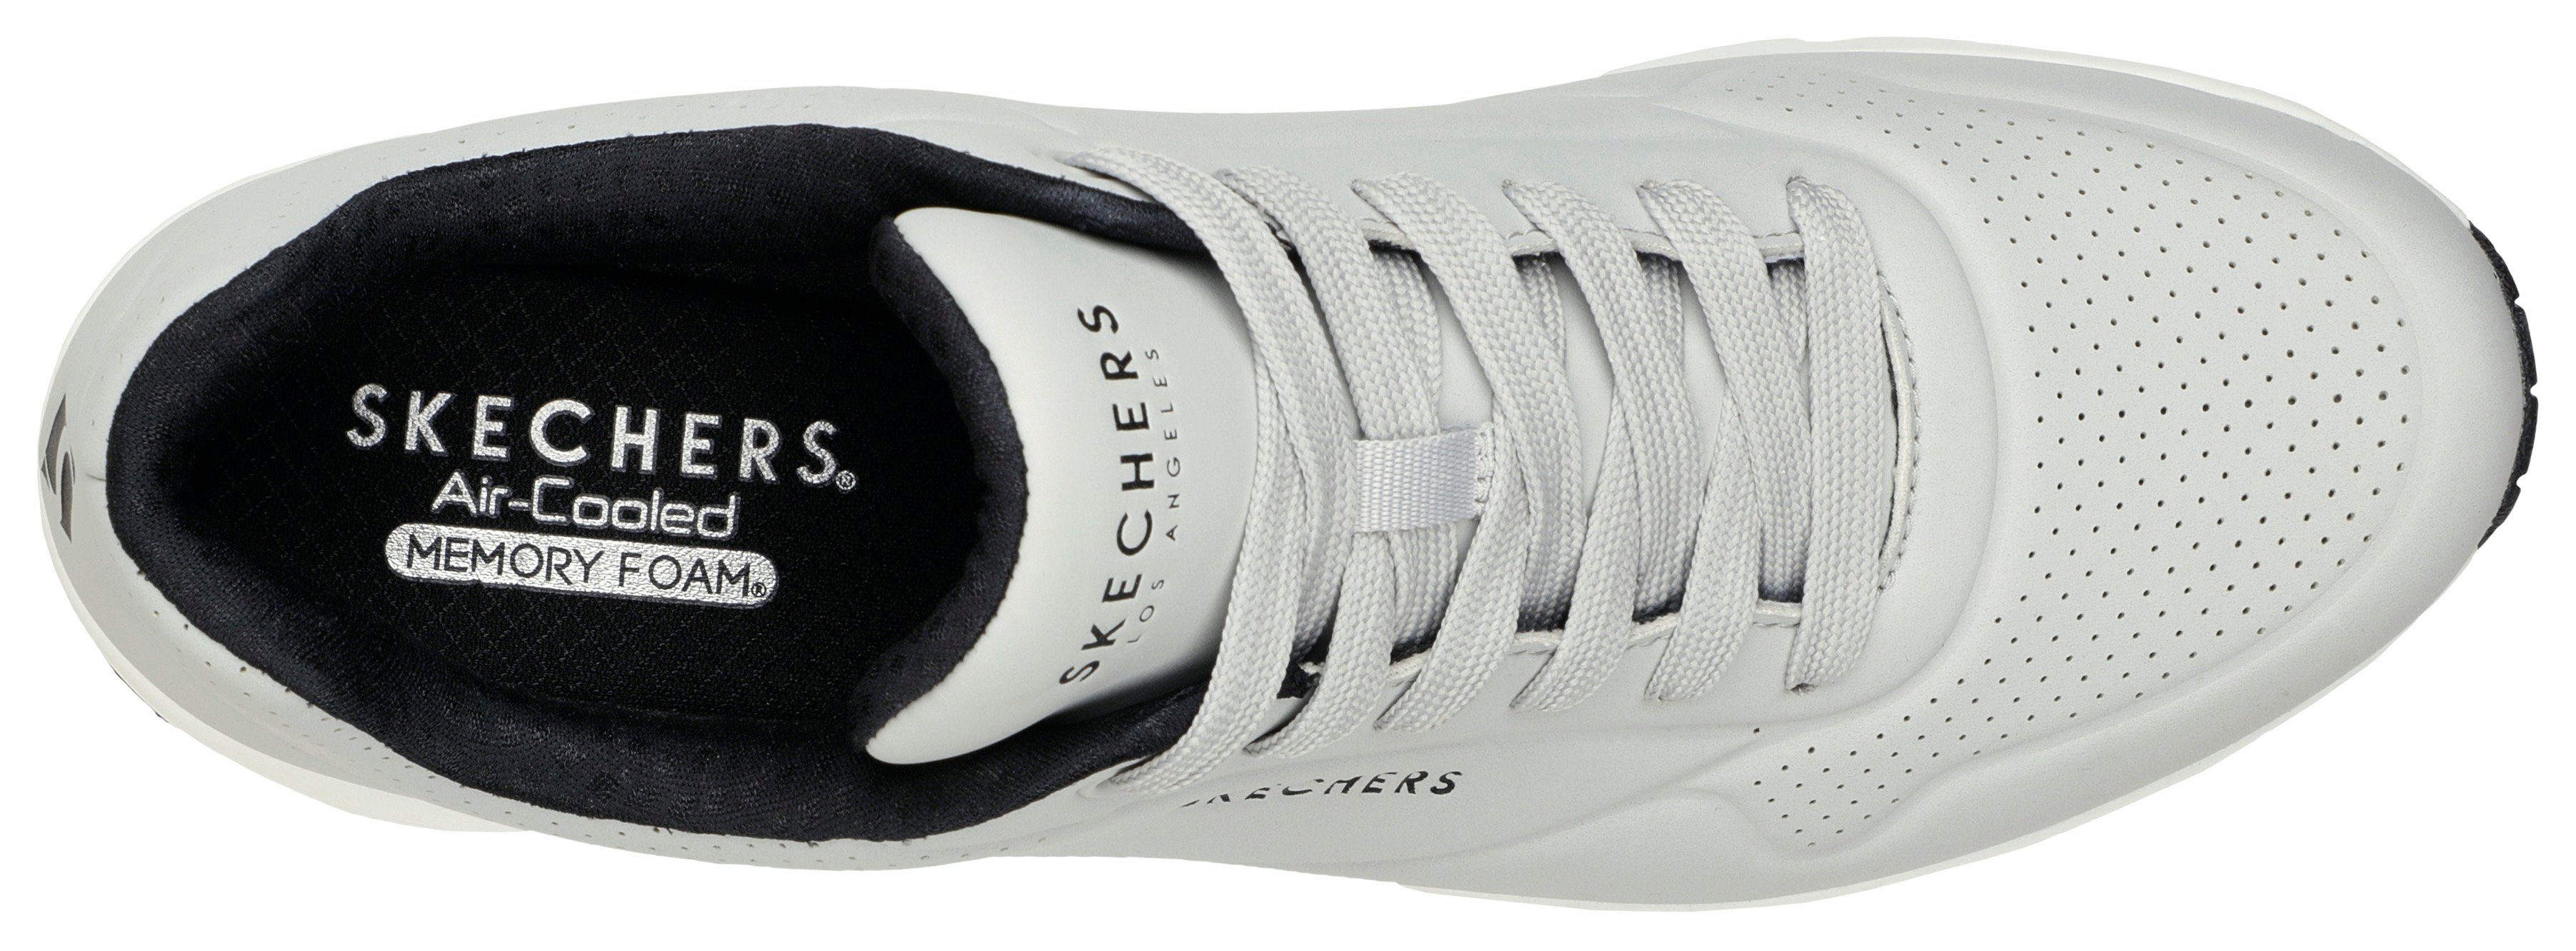 Memory Air-Cooled Skechers Foam mit Uno hellgrau-schwarz Sneaker